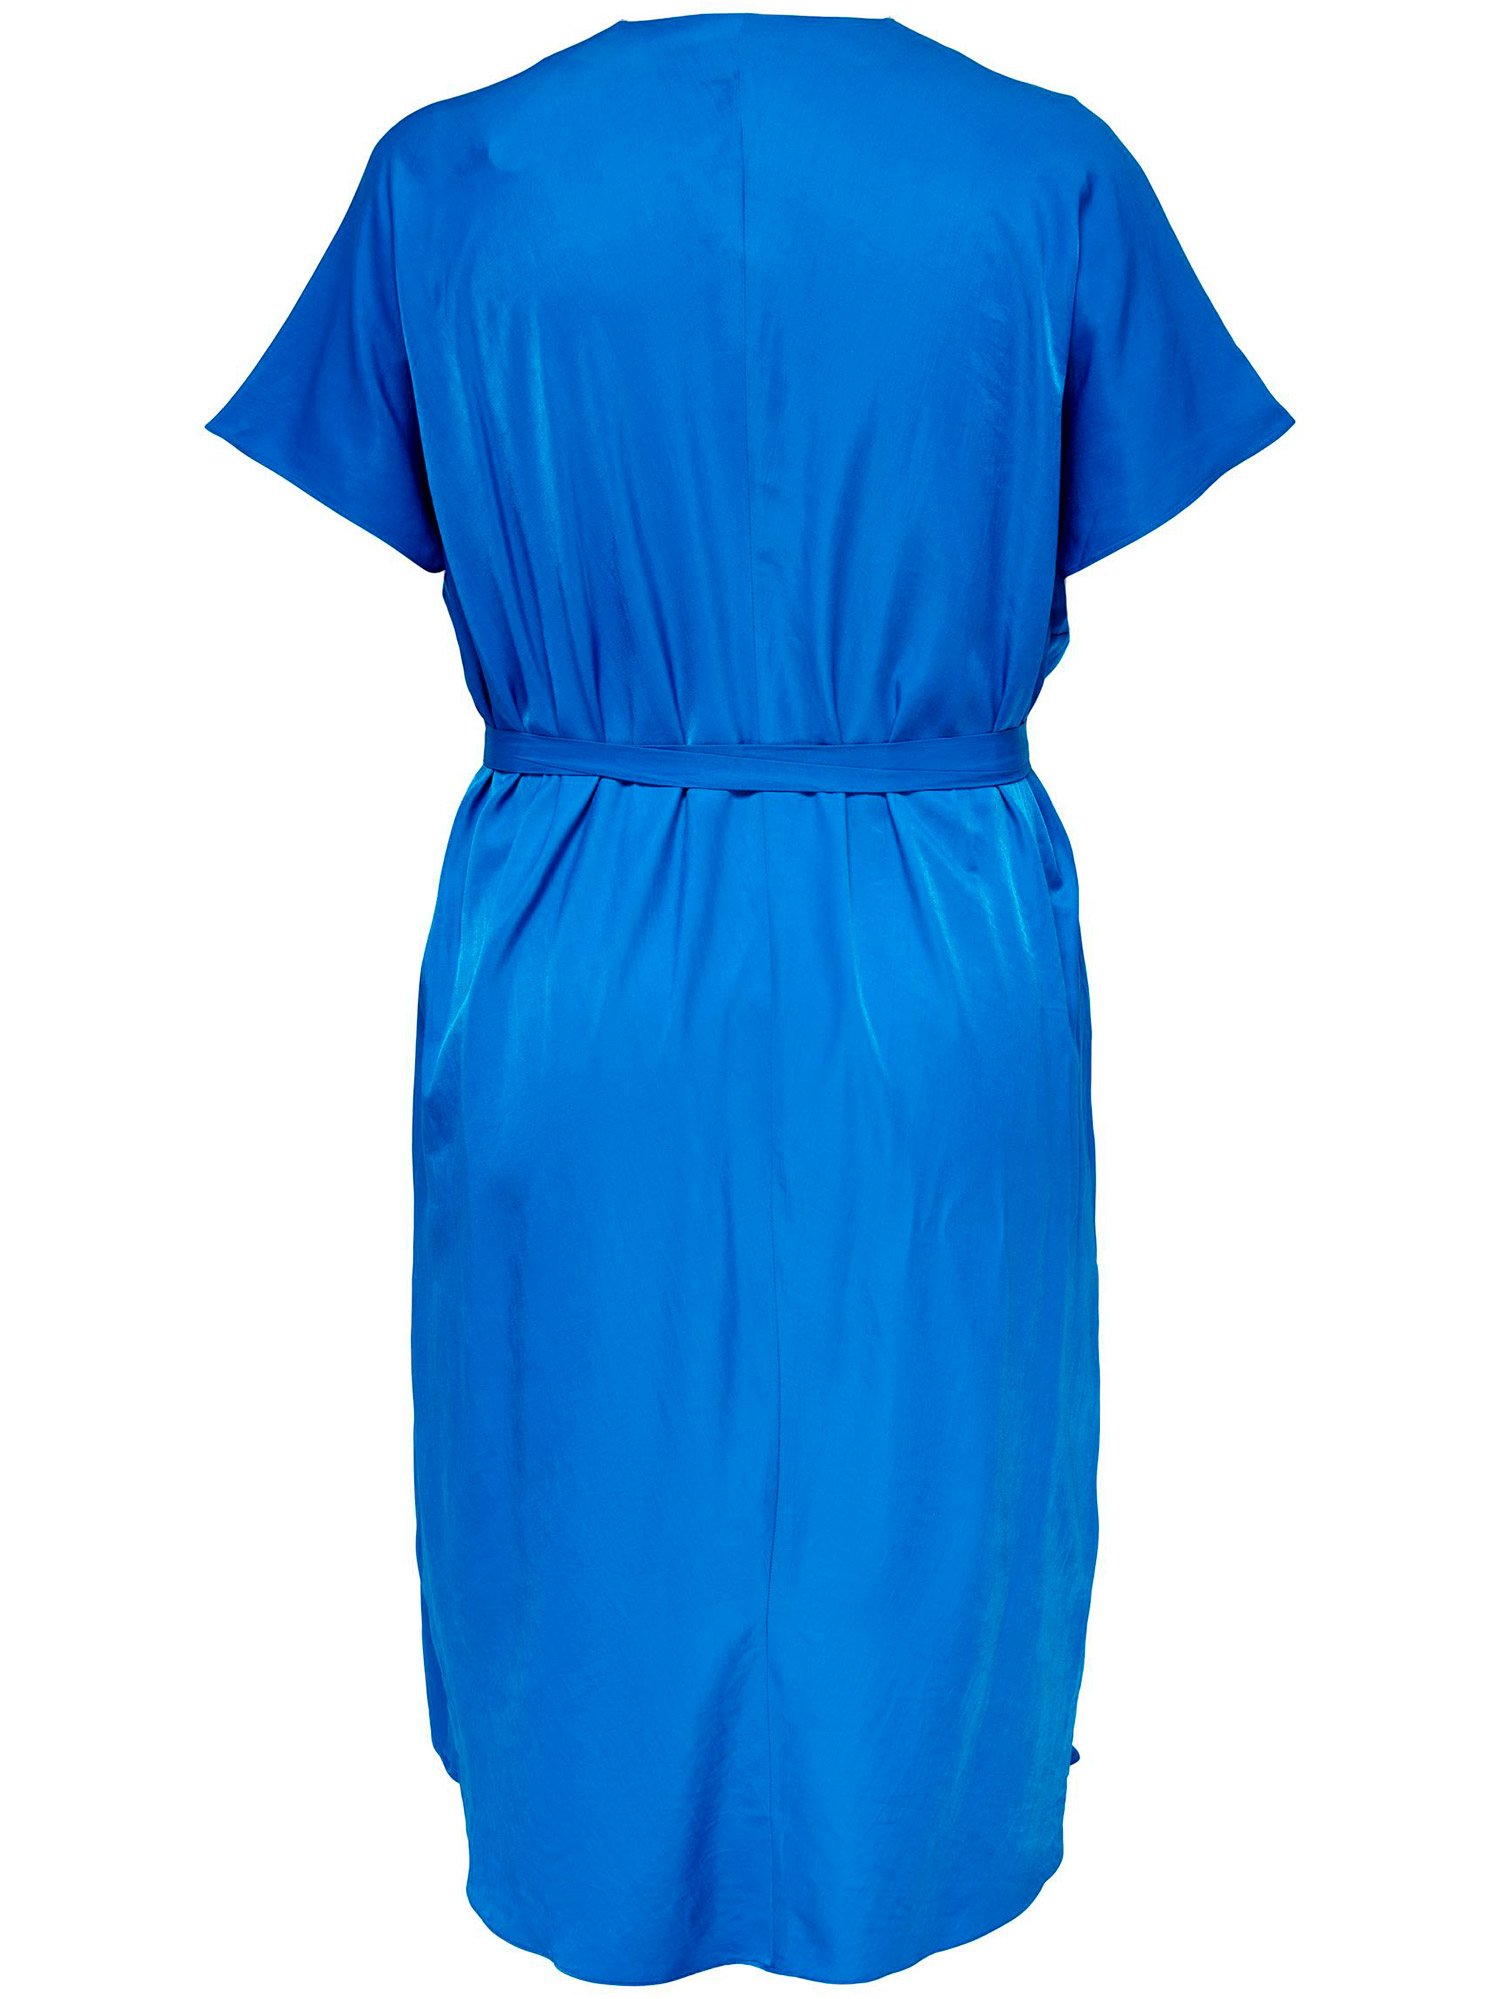 KALANA - Blå kjole med bindebånd fra Only Carmakoma